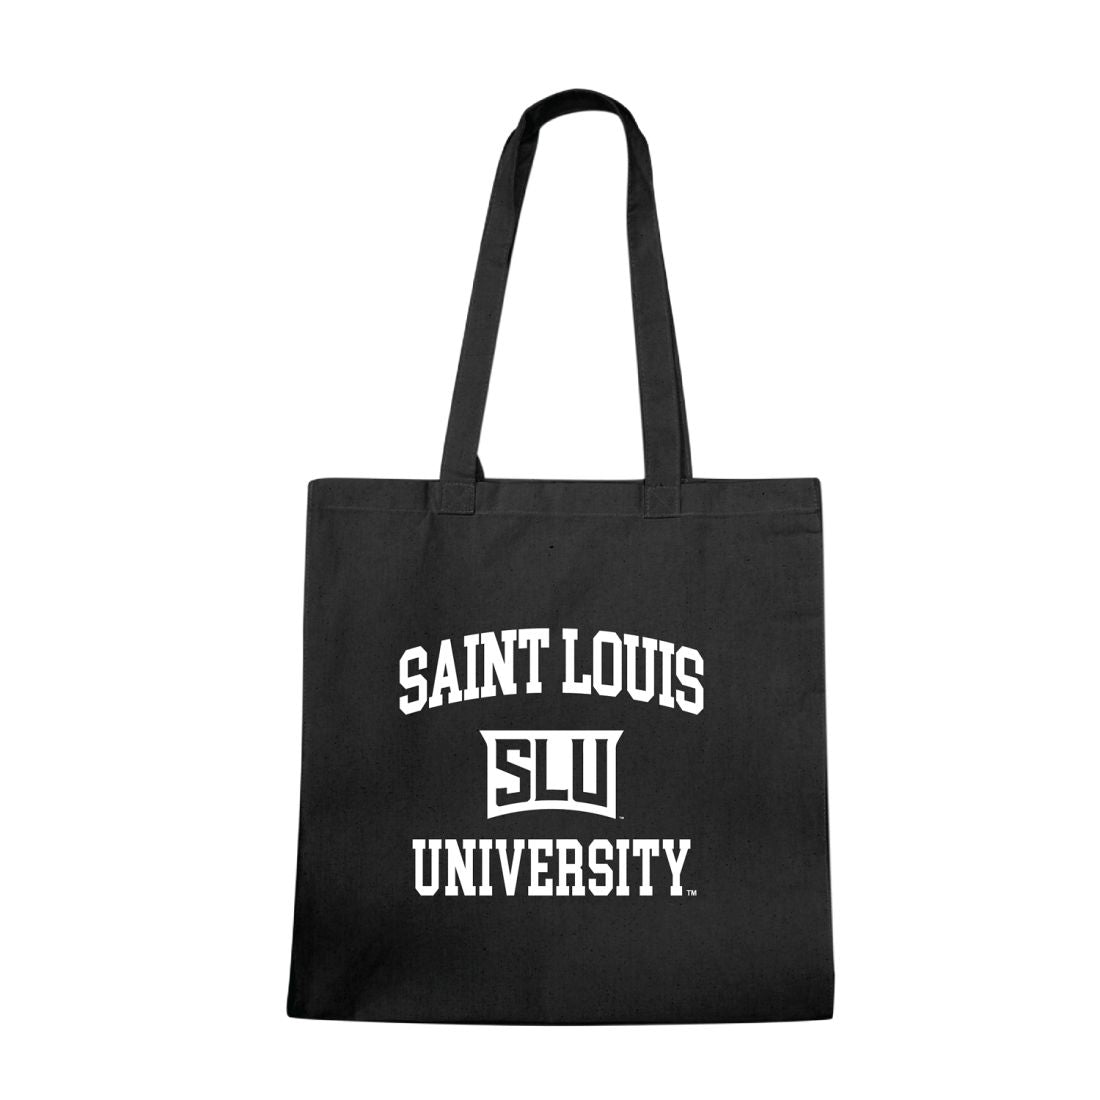 Saint Louis Tote Bag - White